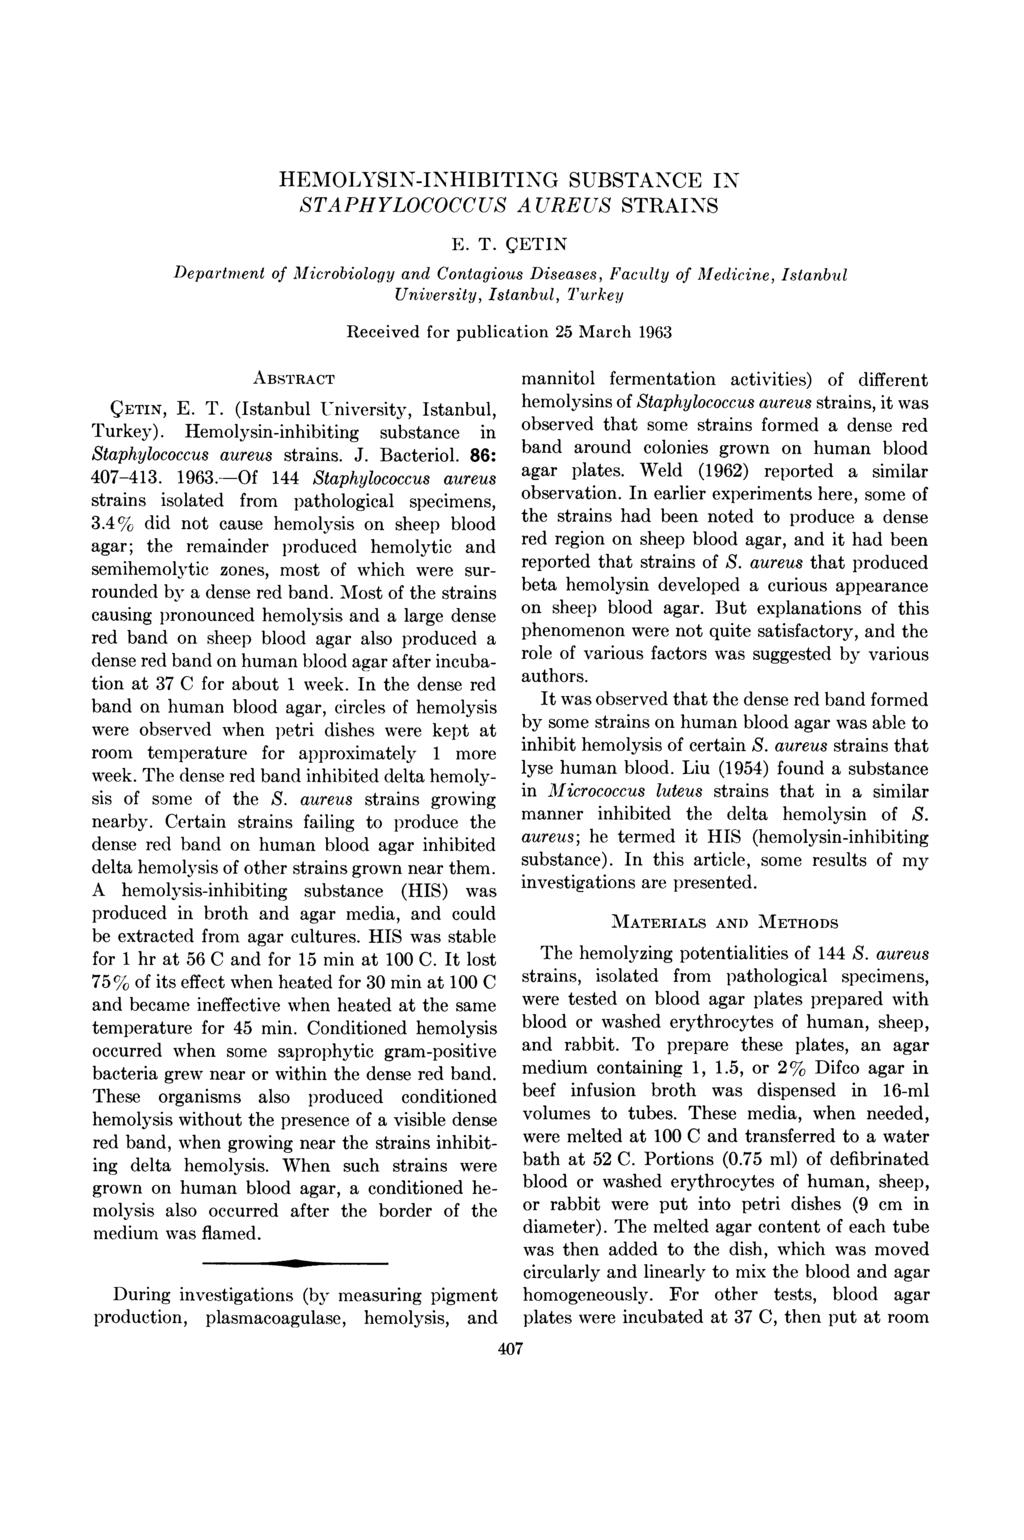 HEMOLYSIN-INHIBITING SUBSTANCE IN STAPHYLOCOCCUS AUREUS STRAINS E. T.